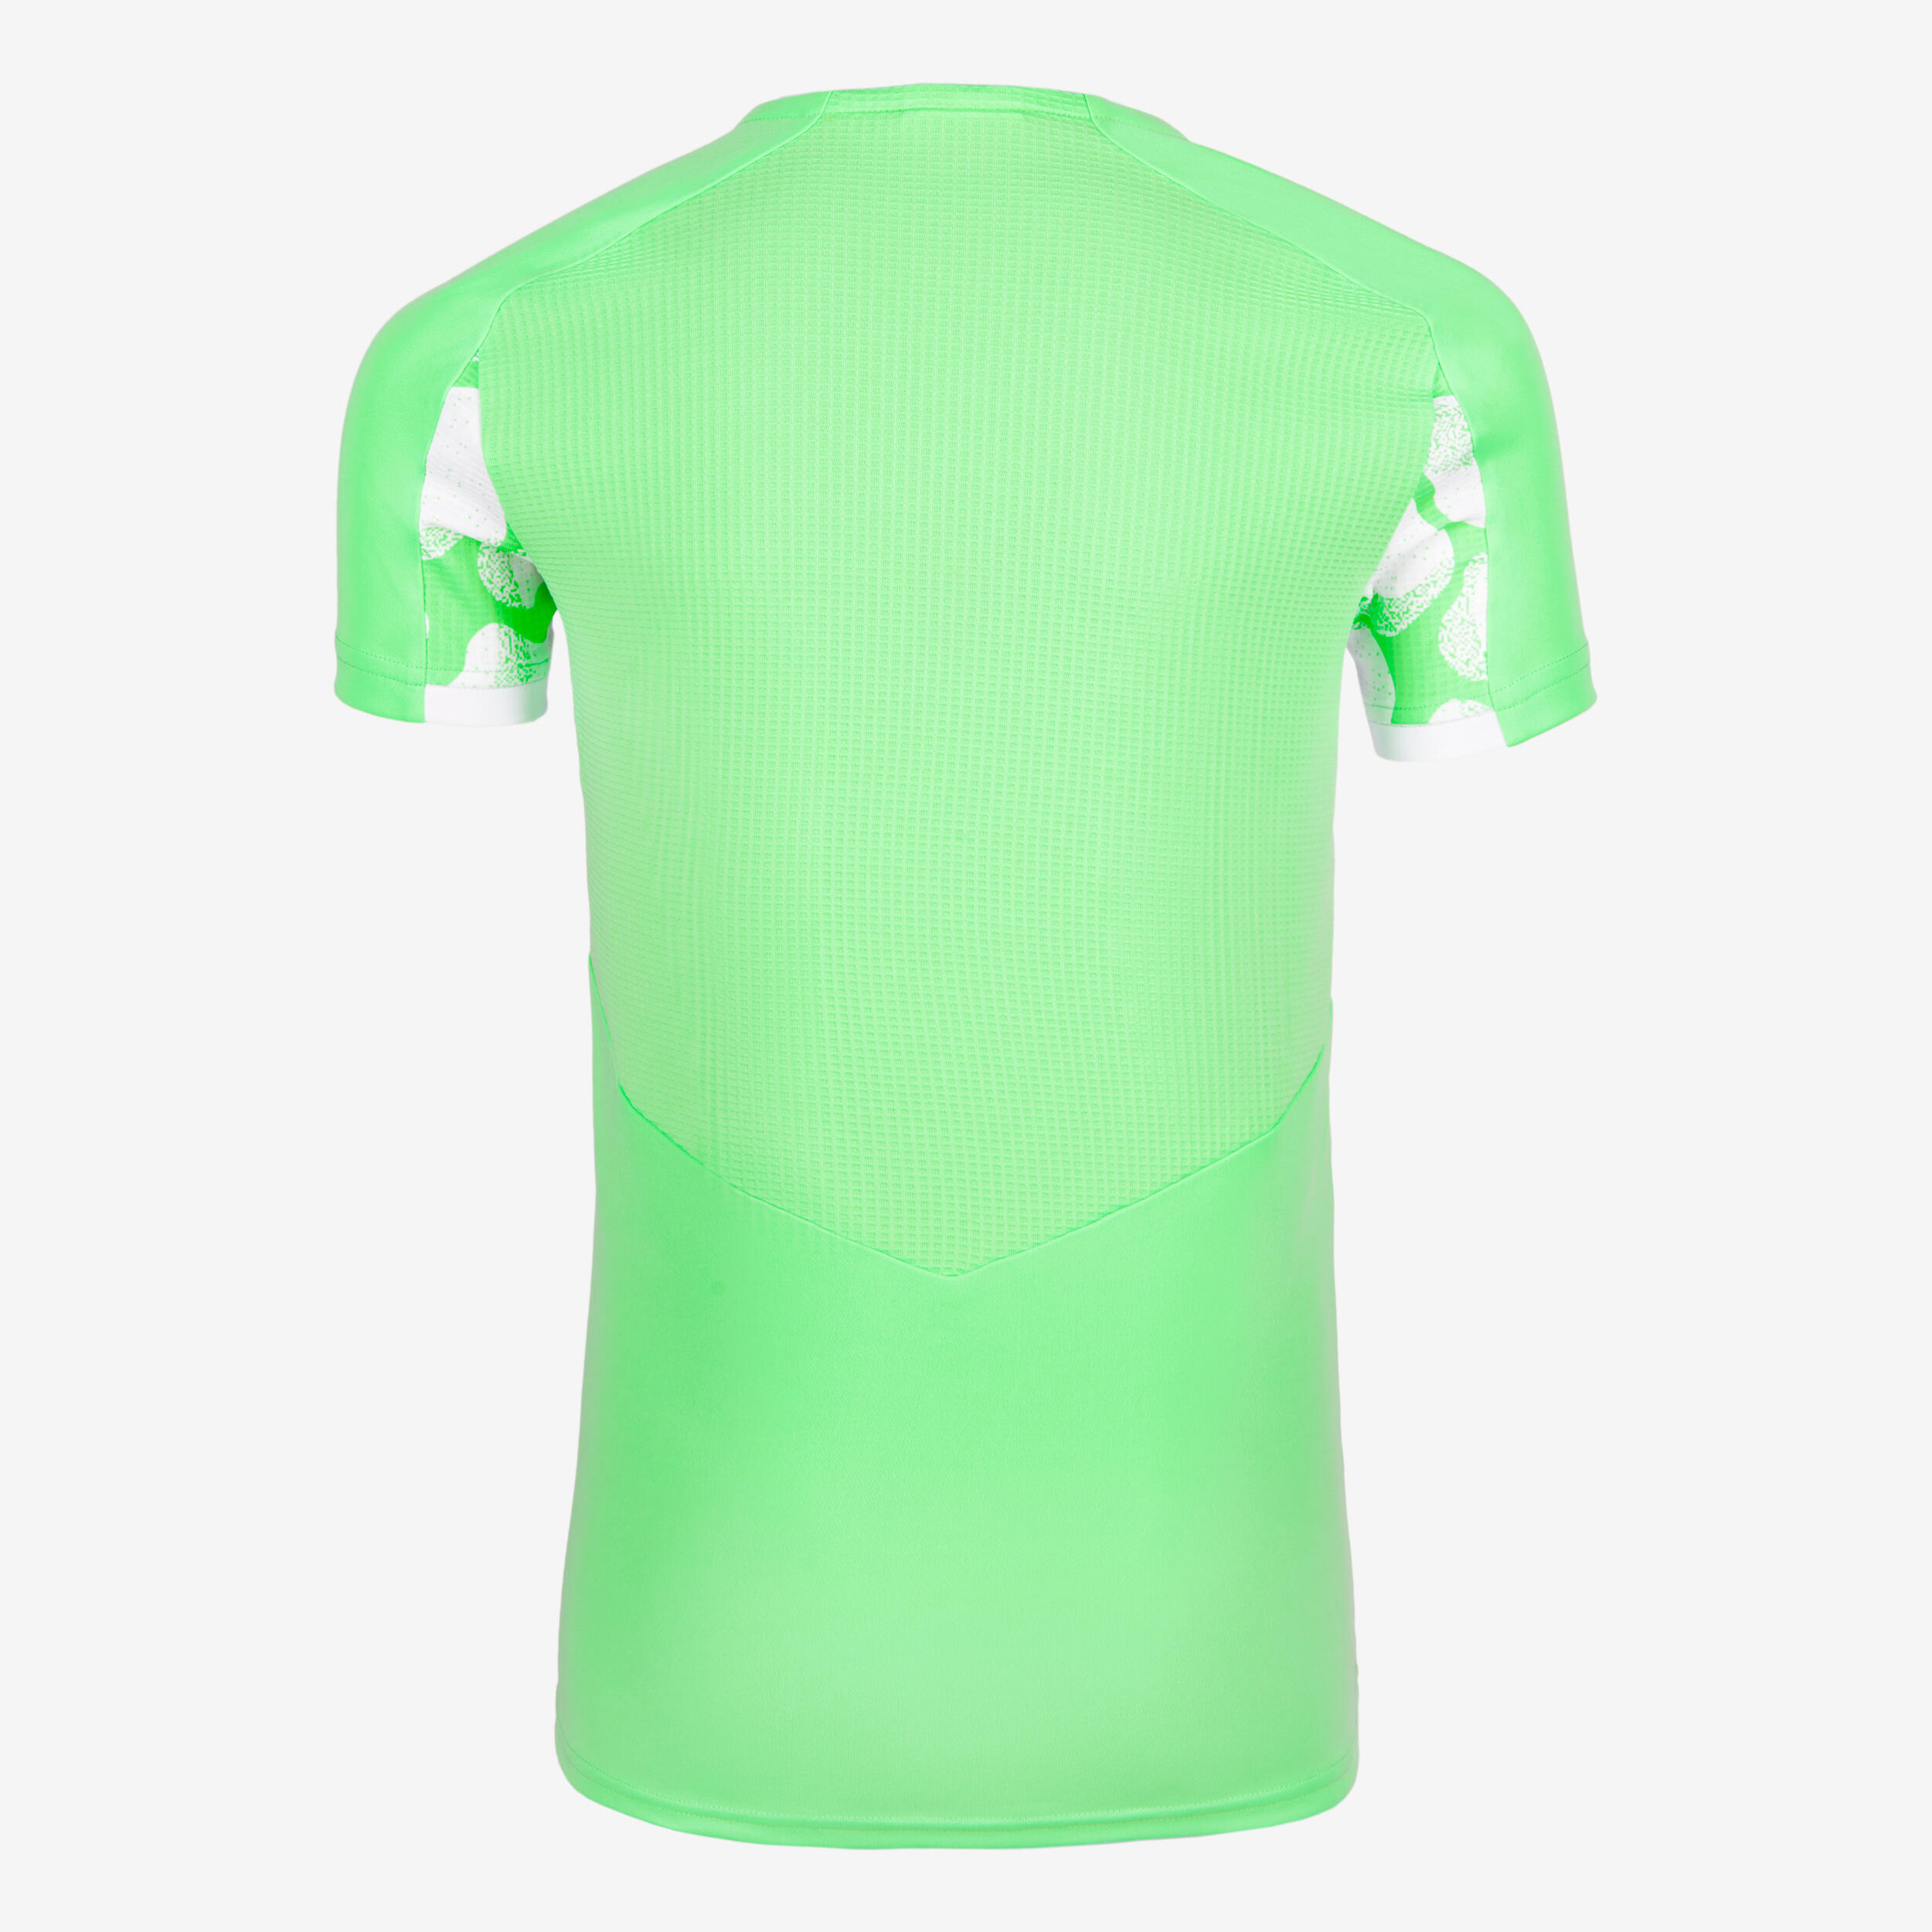 Girls' Football Shirt Viralto - Aqua Green & White 3/7